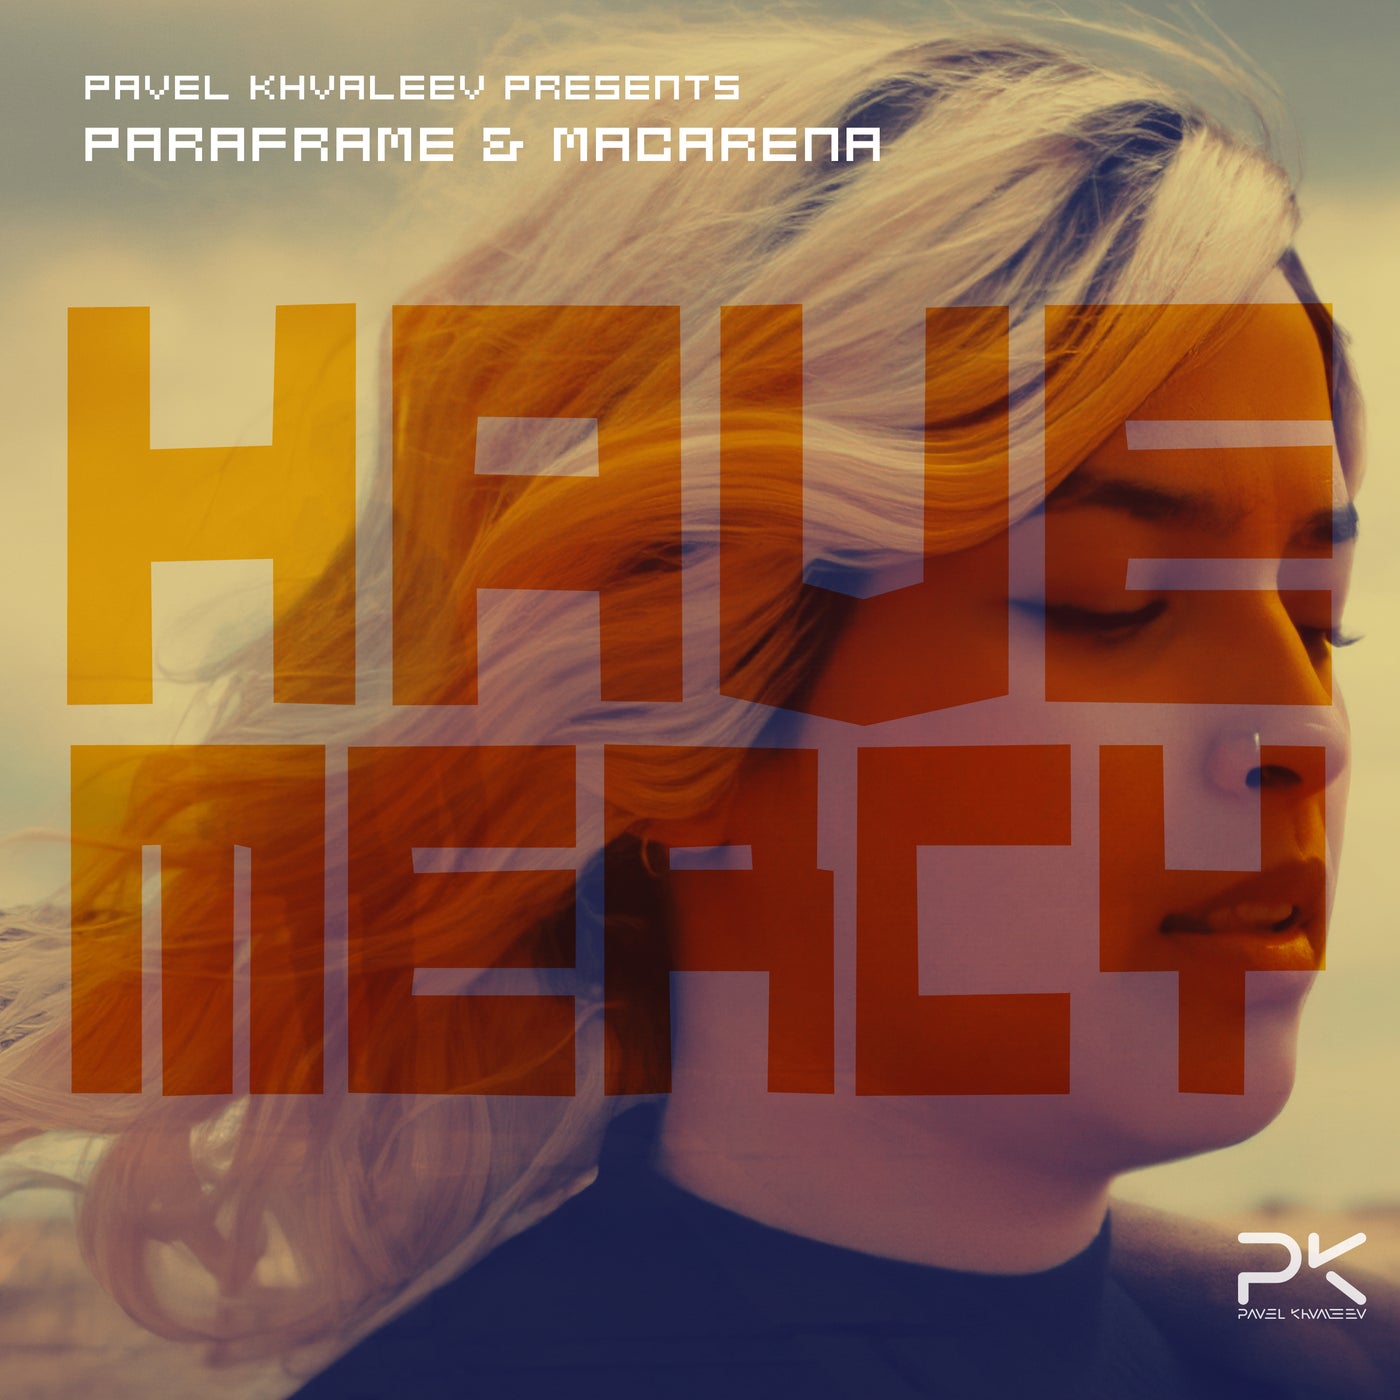 Pavel Khvaleev presents Paraframe feat. Macarena - Have Mercy (Original Mix)